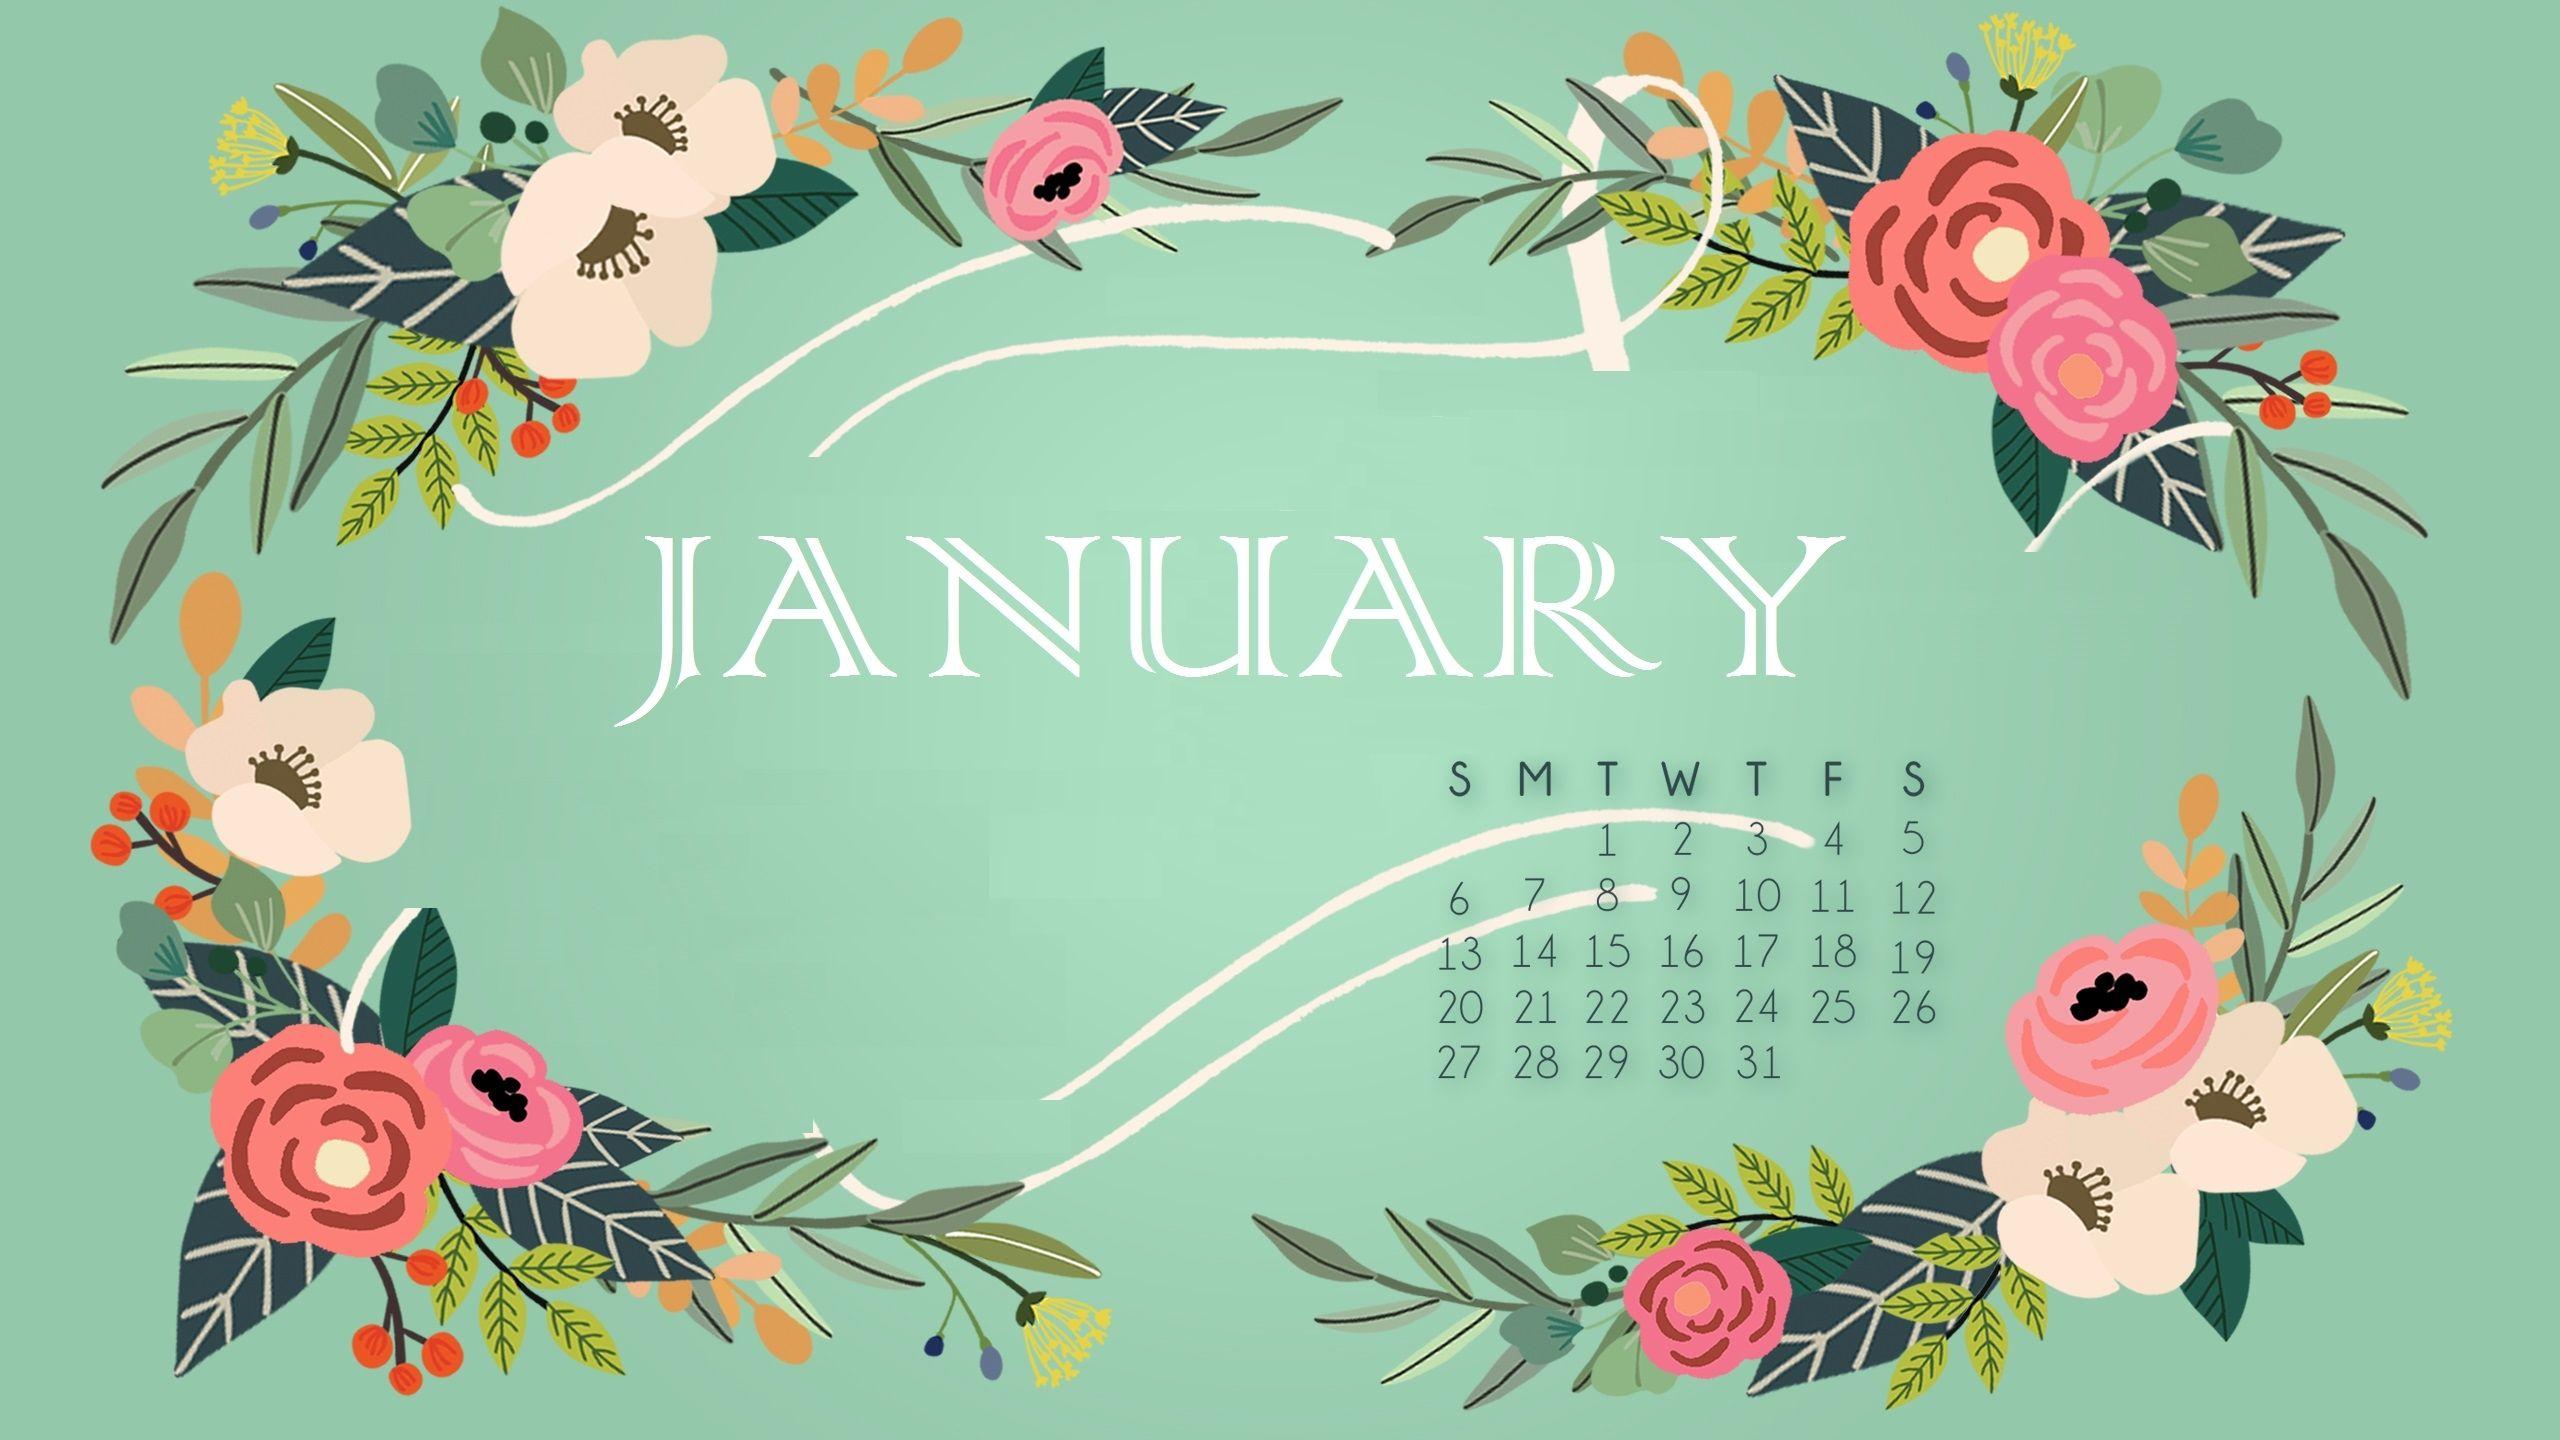 January 2019 iPhone Calendar Wallpaper. Calendar Printable